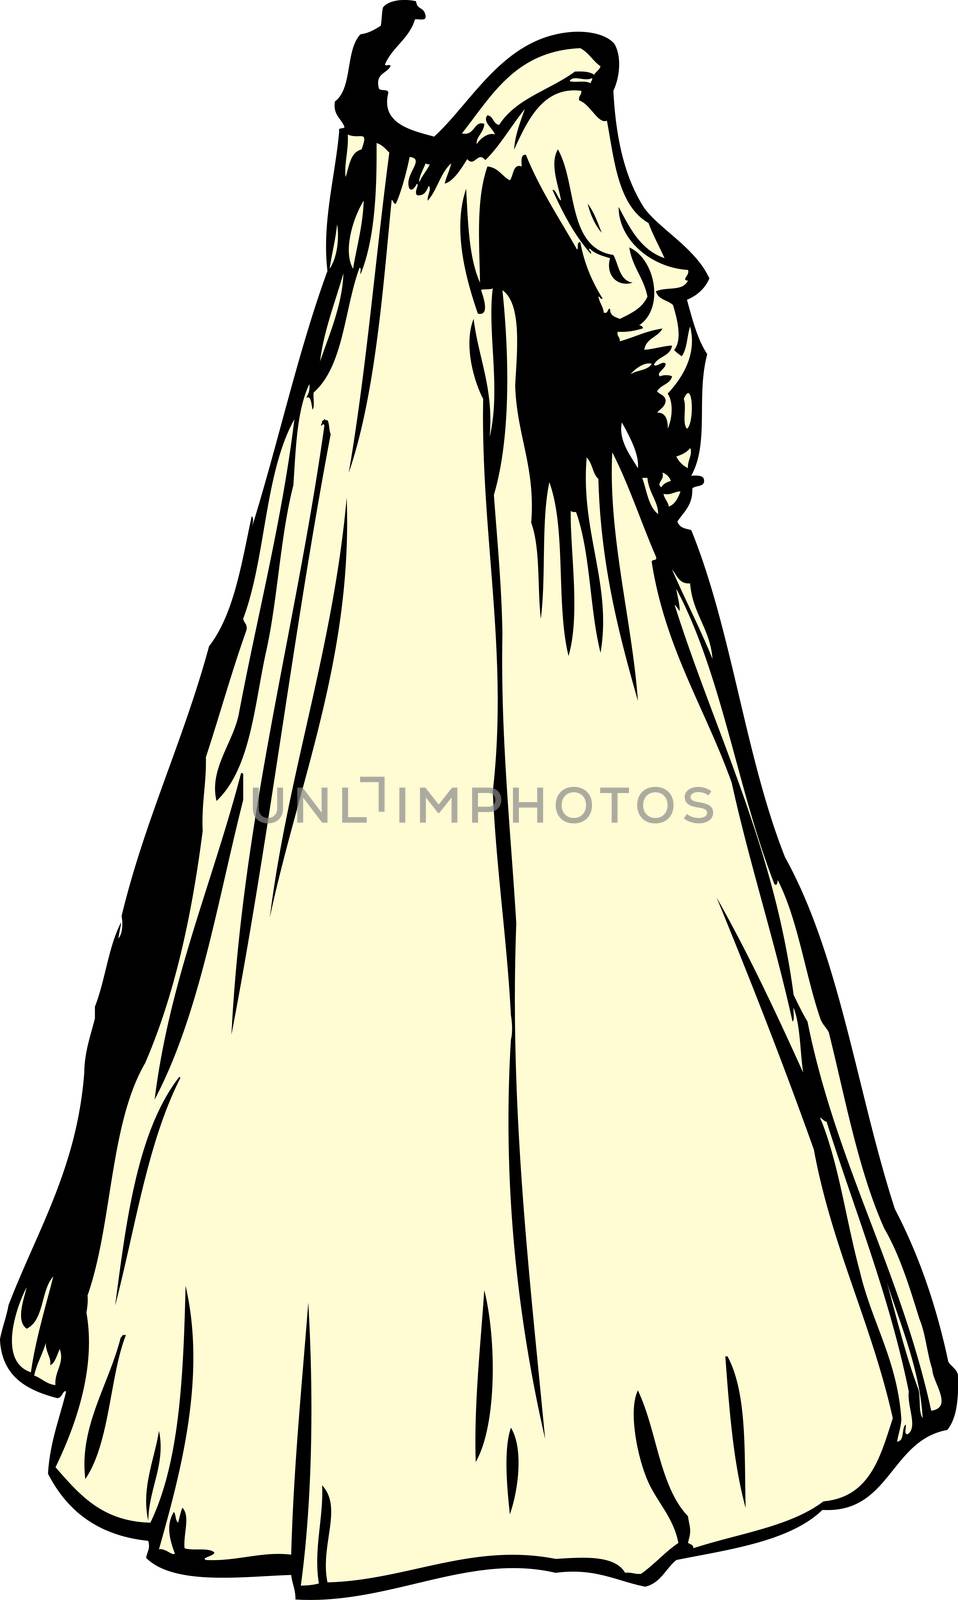 Single empty 1700's era nightgown over white background